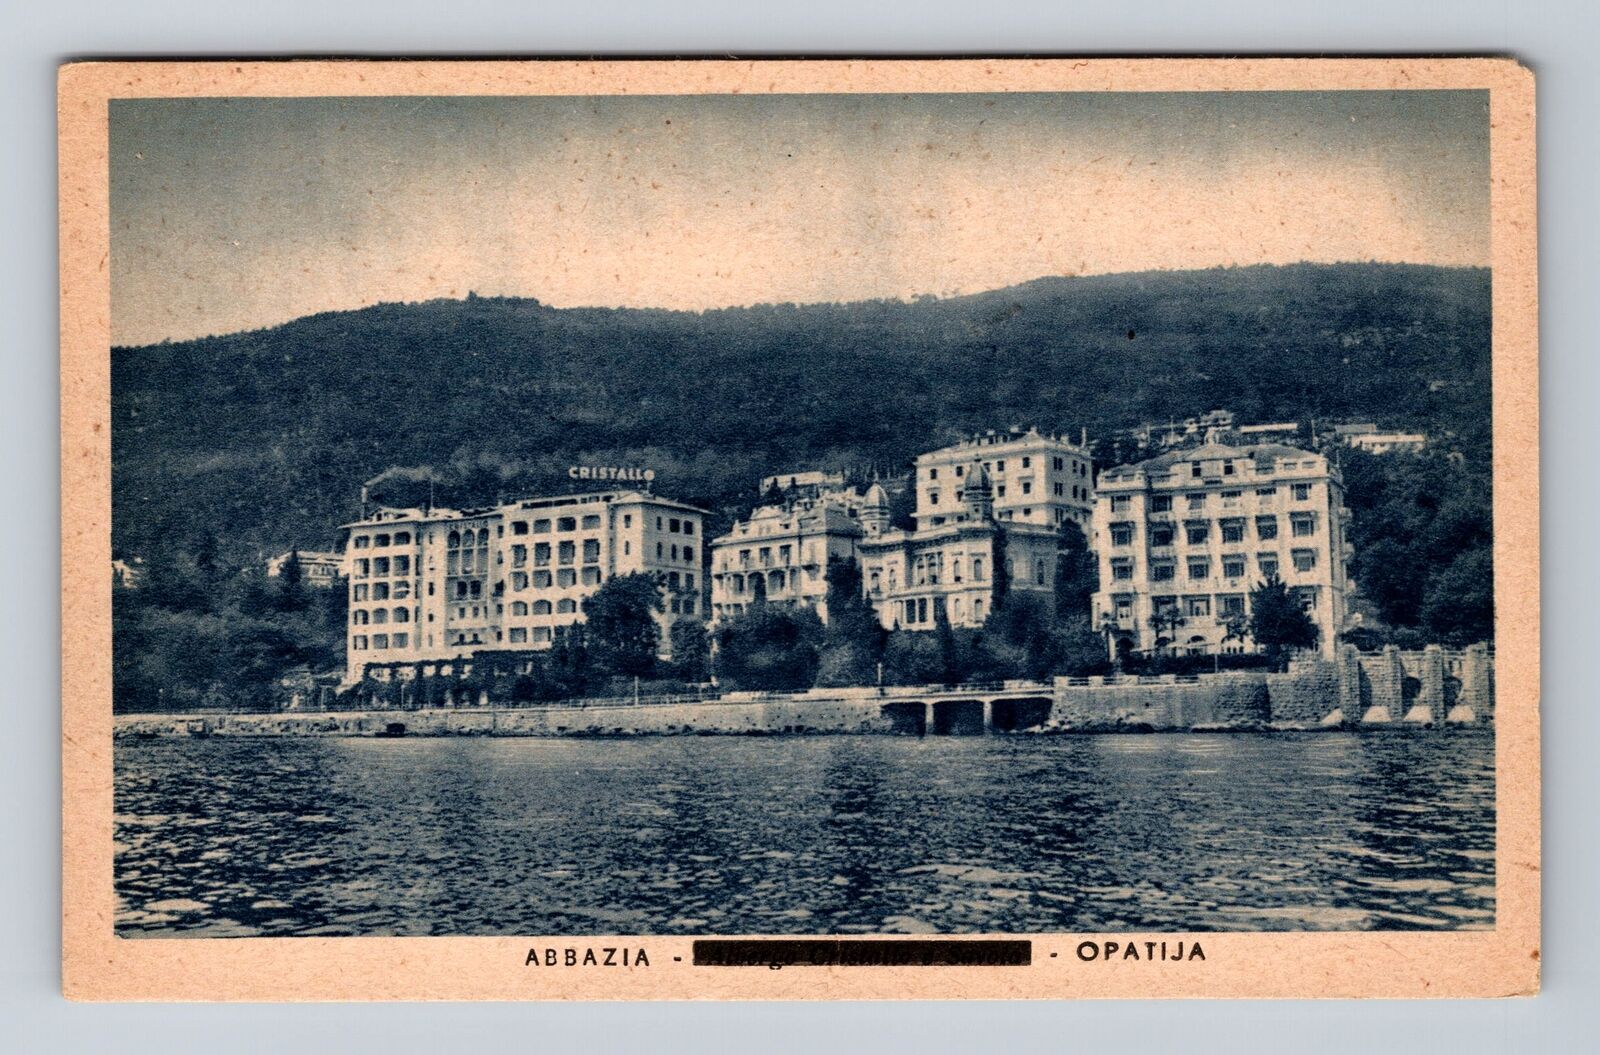 Abbazia Opatija Croatia, Hotel Cristallo Antique Souvenir Vintage c1910 Postcard